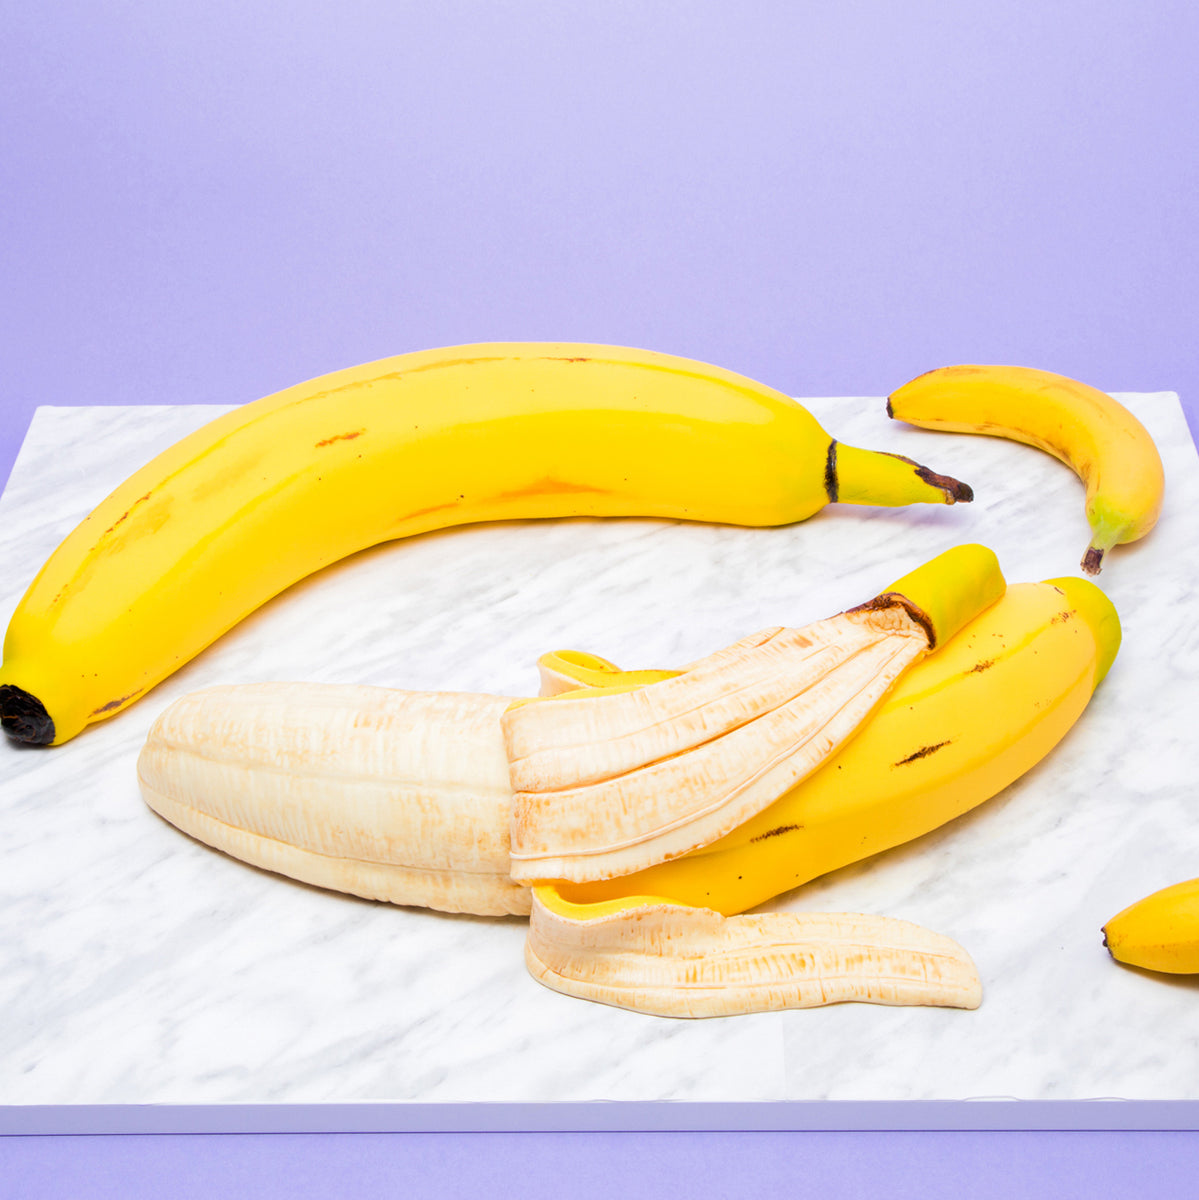 banana shaped birthday cake